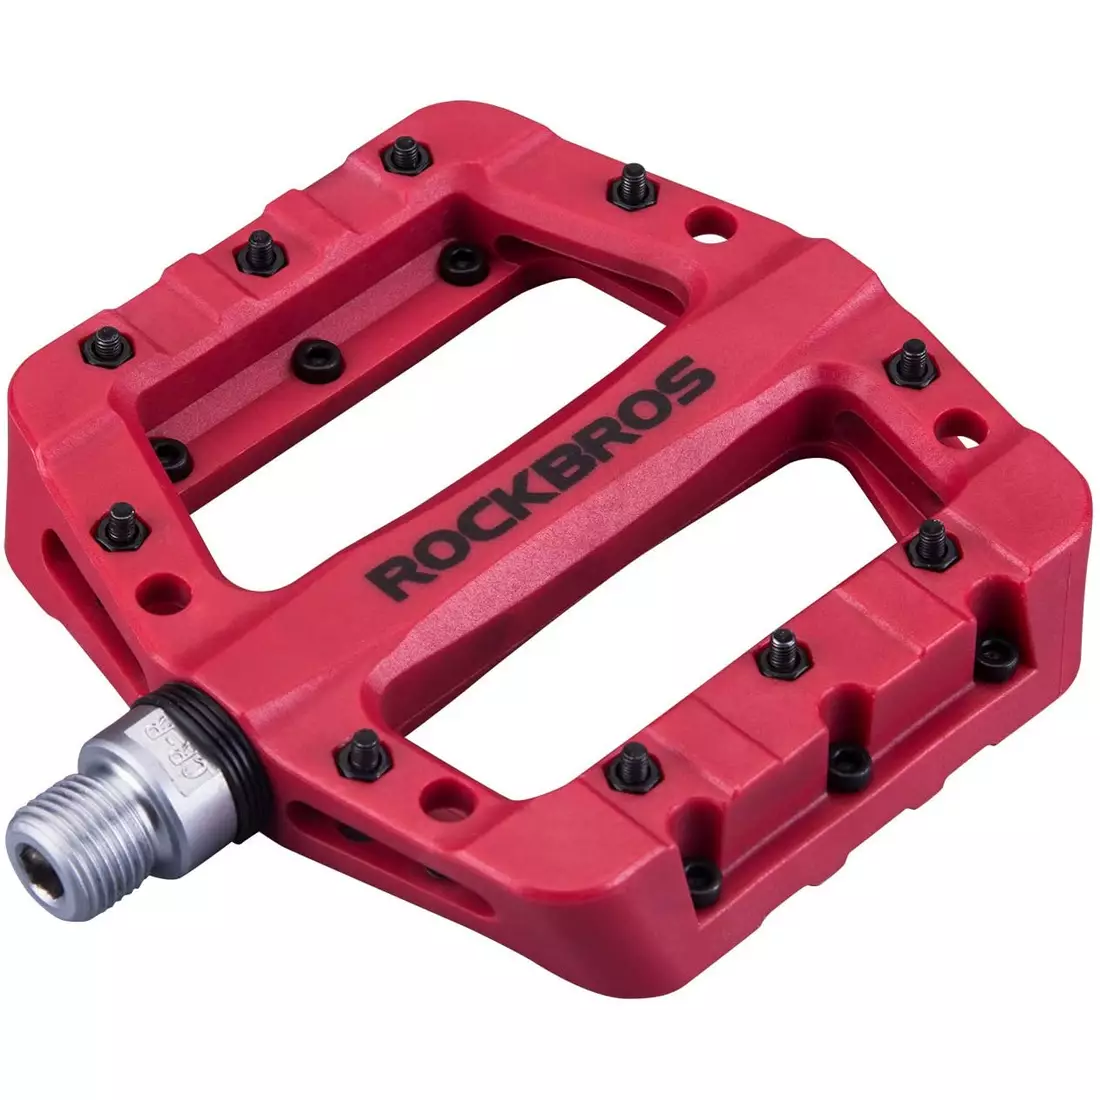 Rockbros platform pedals nylon red 2017-12CRD